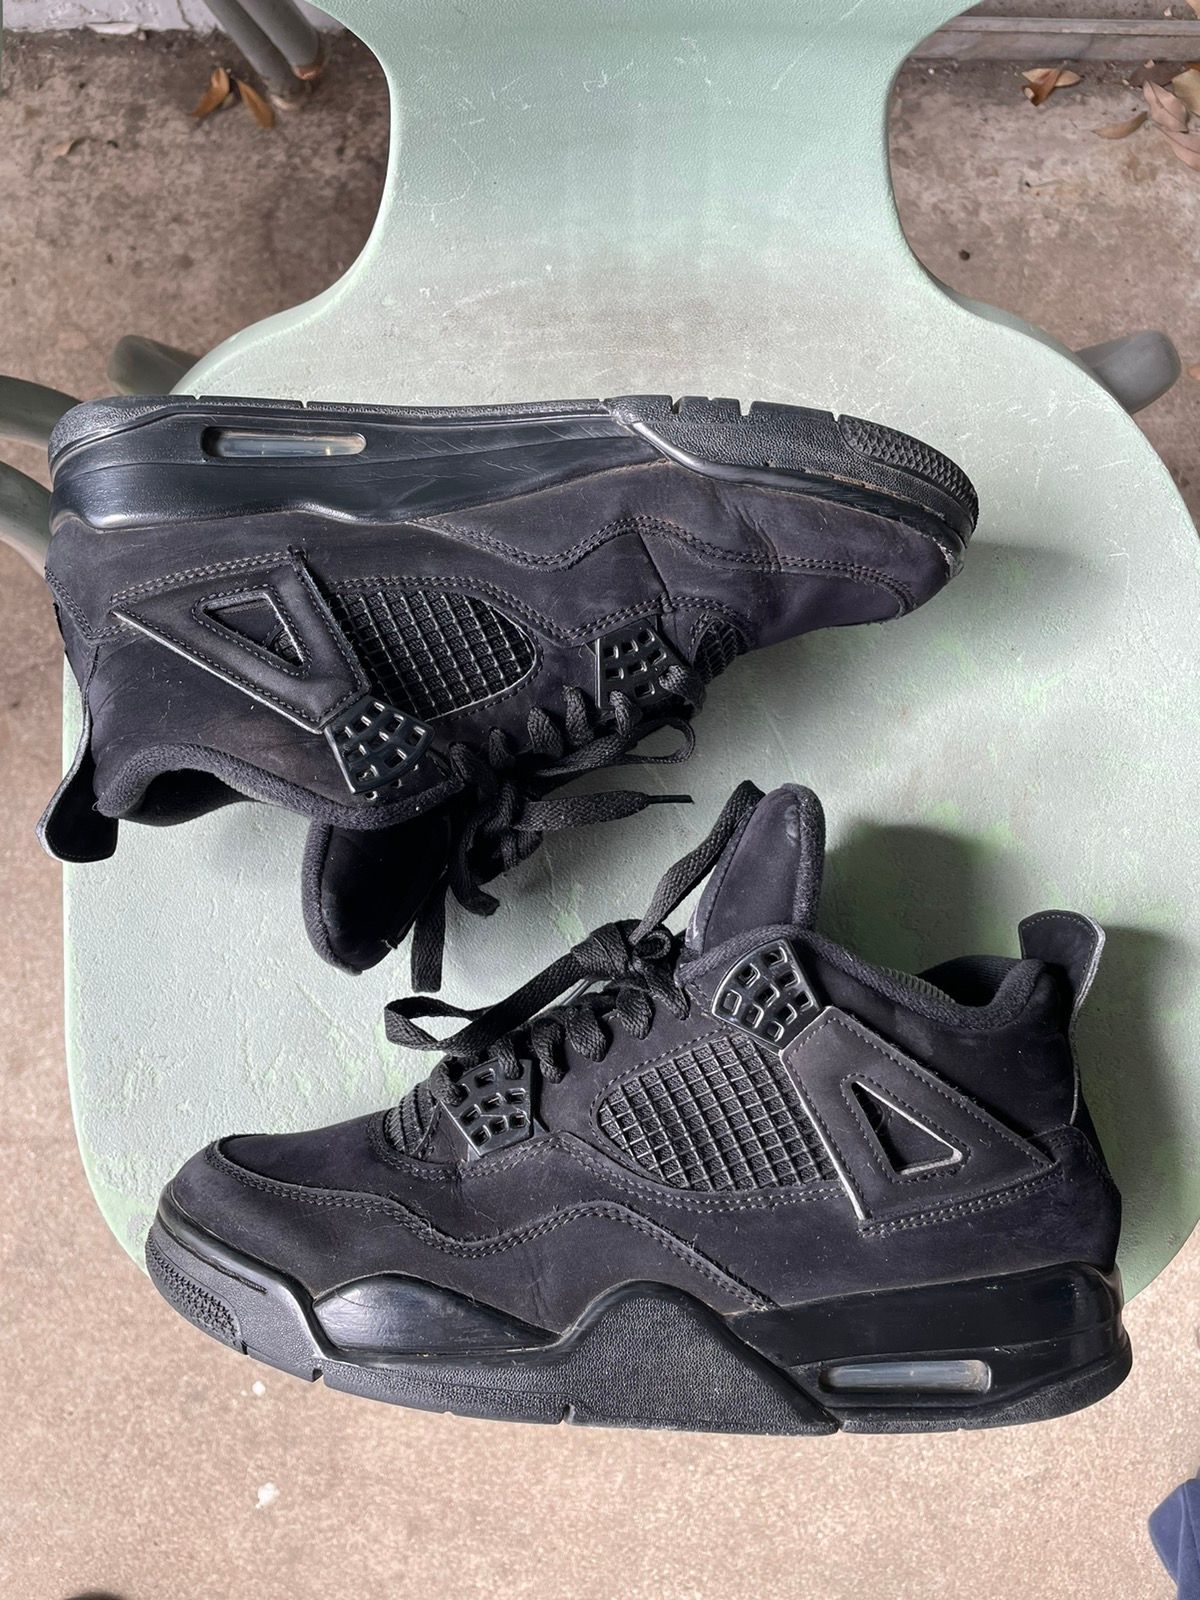 Pre-owned Jordan Brand 4 “black Cat” 2020 Release Shoes